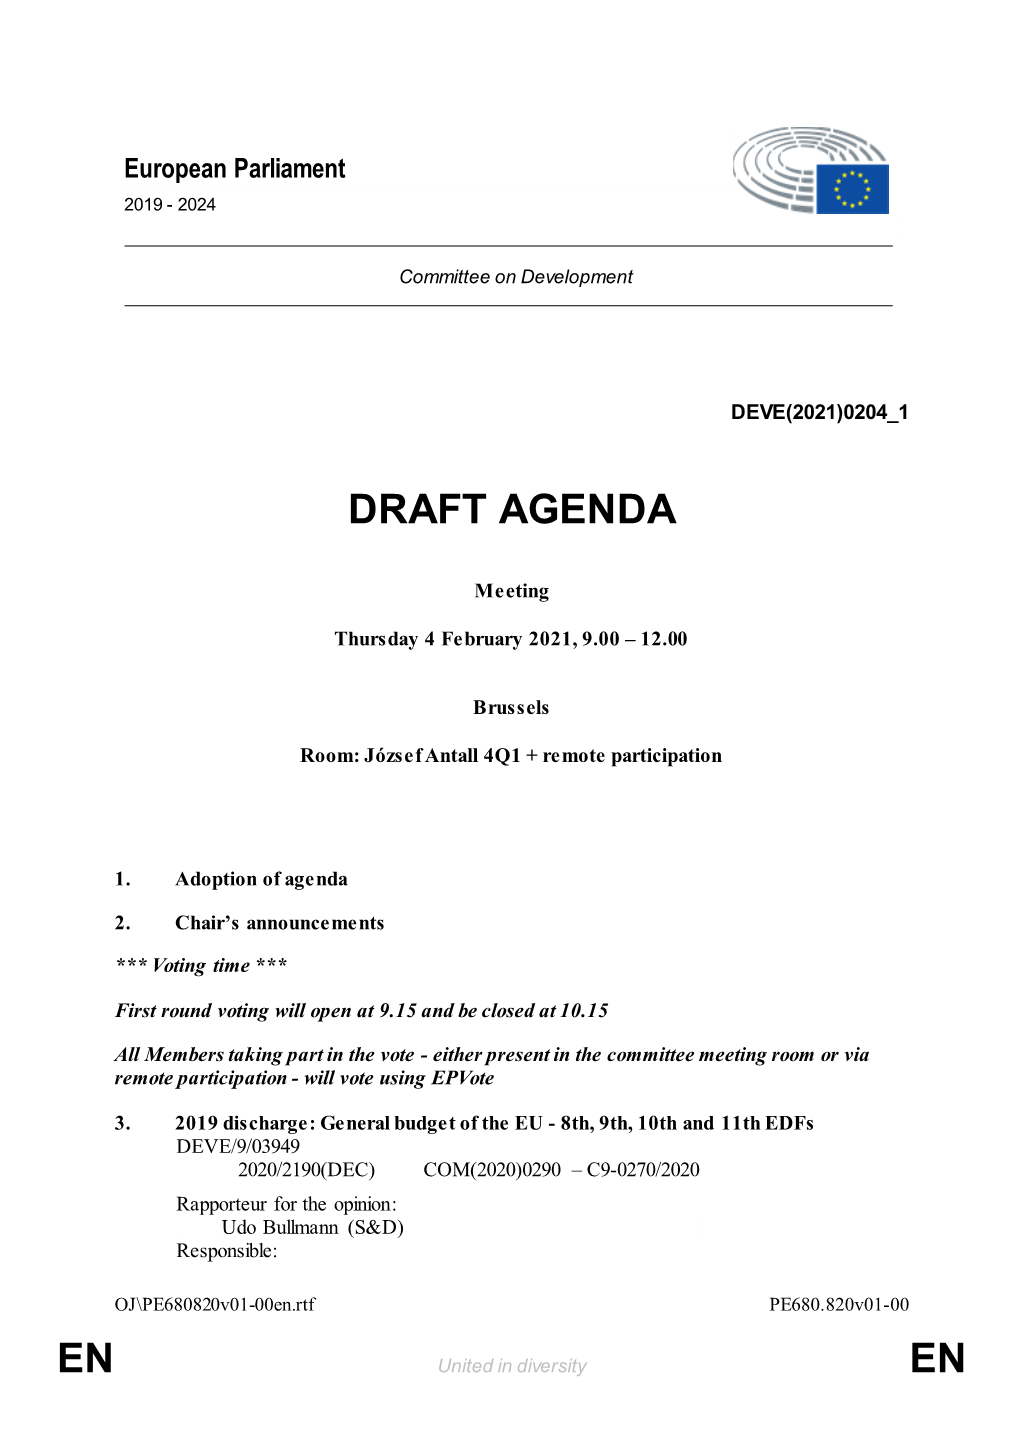 Agenda of the Meeting